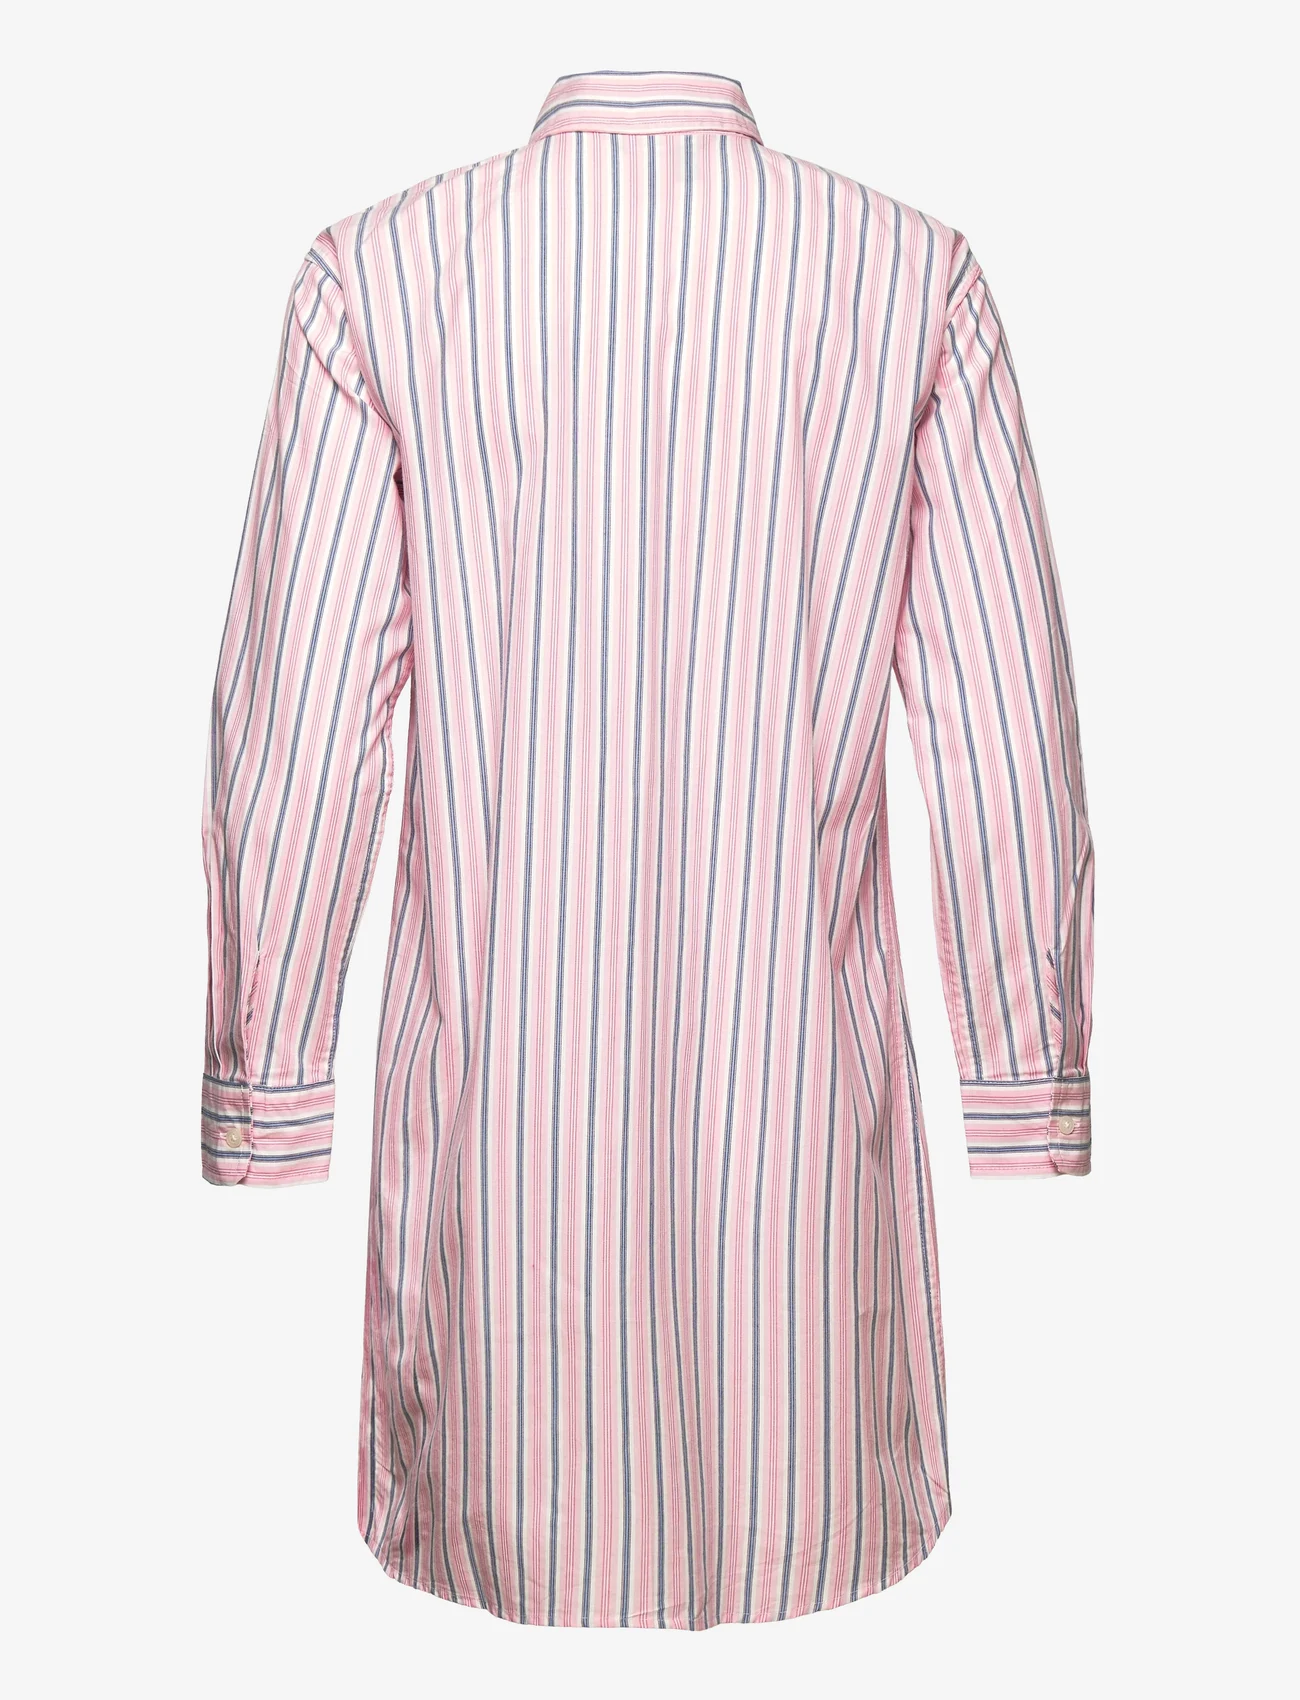 Lauren Ralph Lauren Homewear - LRL L/S HIS SLEEPSHIRT - dzimšanas dienas dāvanas - pink stripe - 1